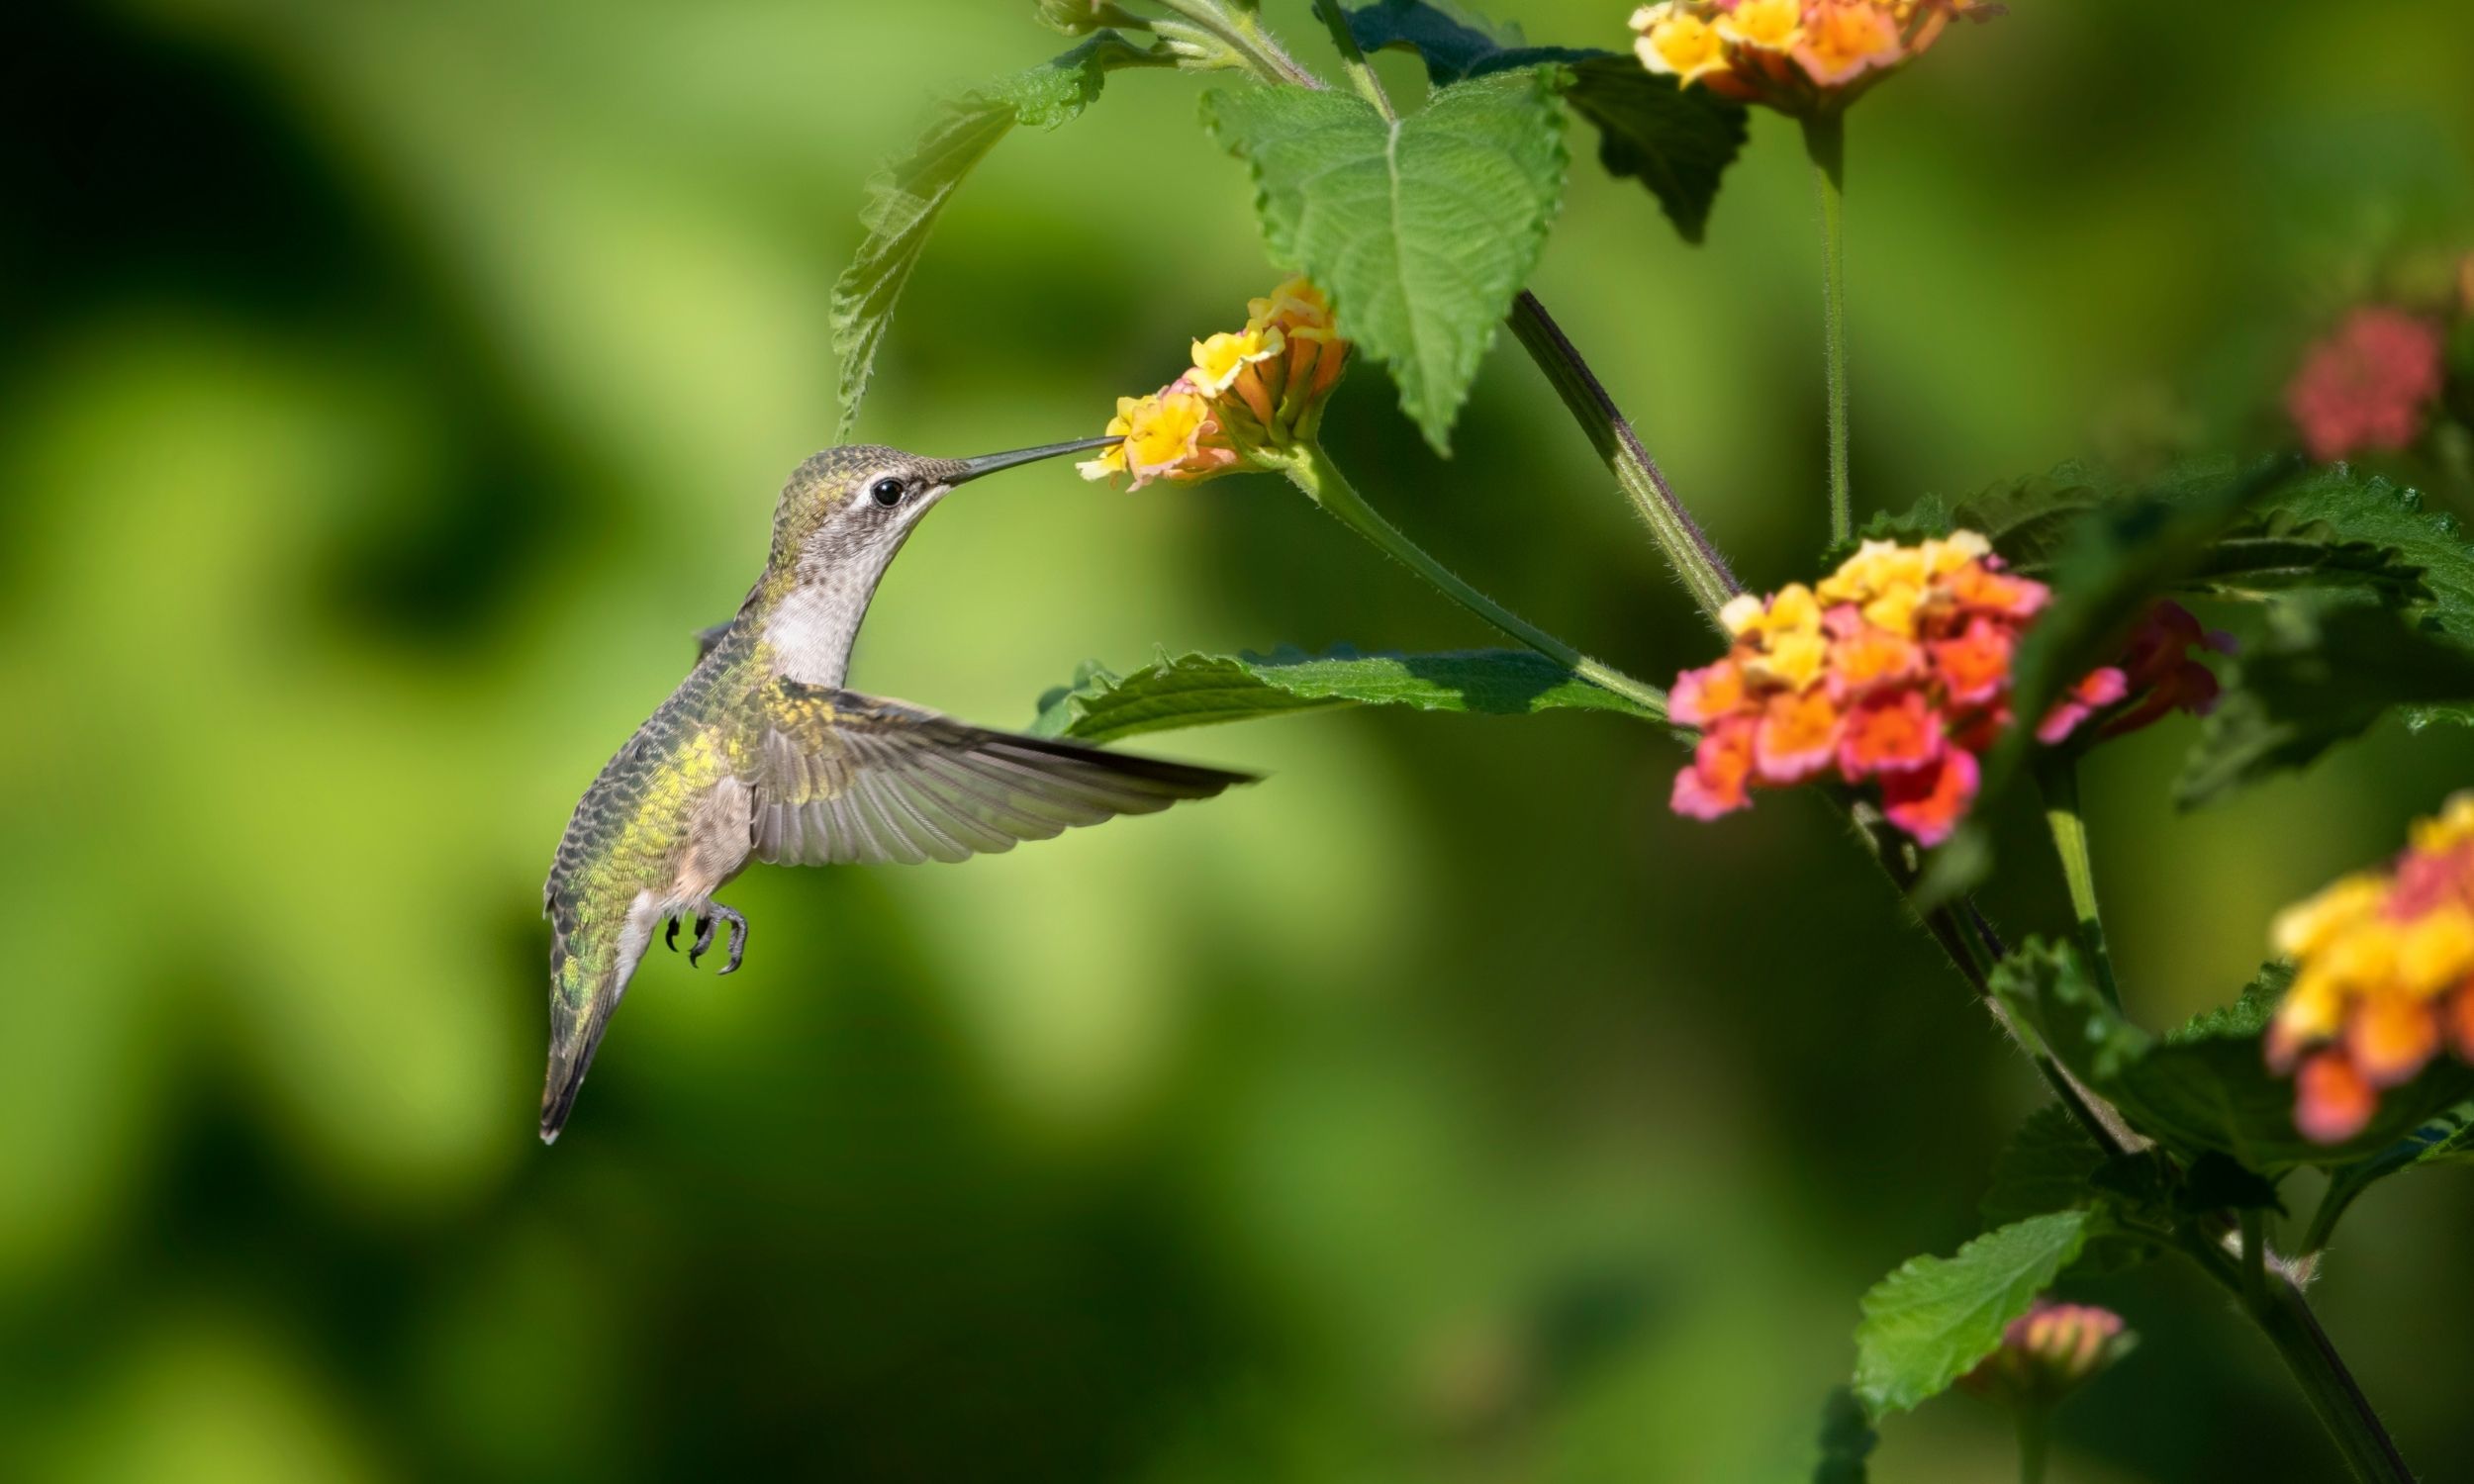 hummingbird drinking nectar from a flower